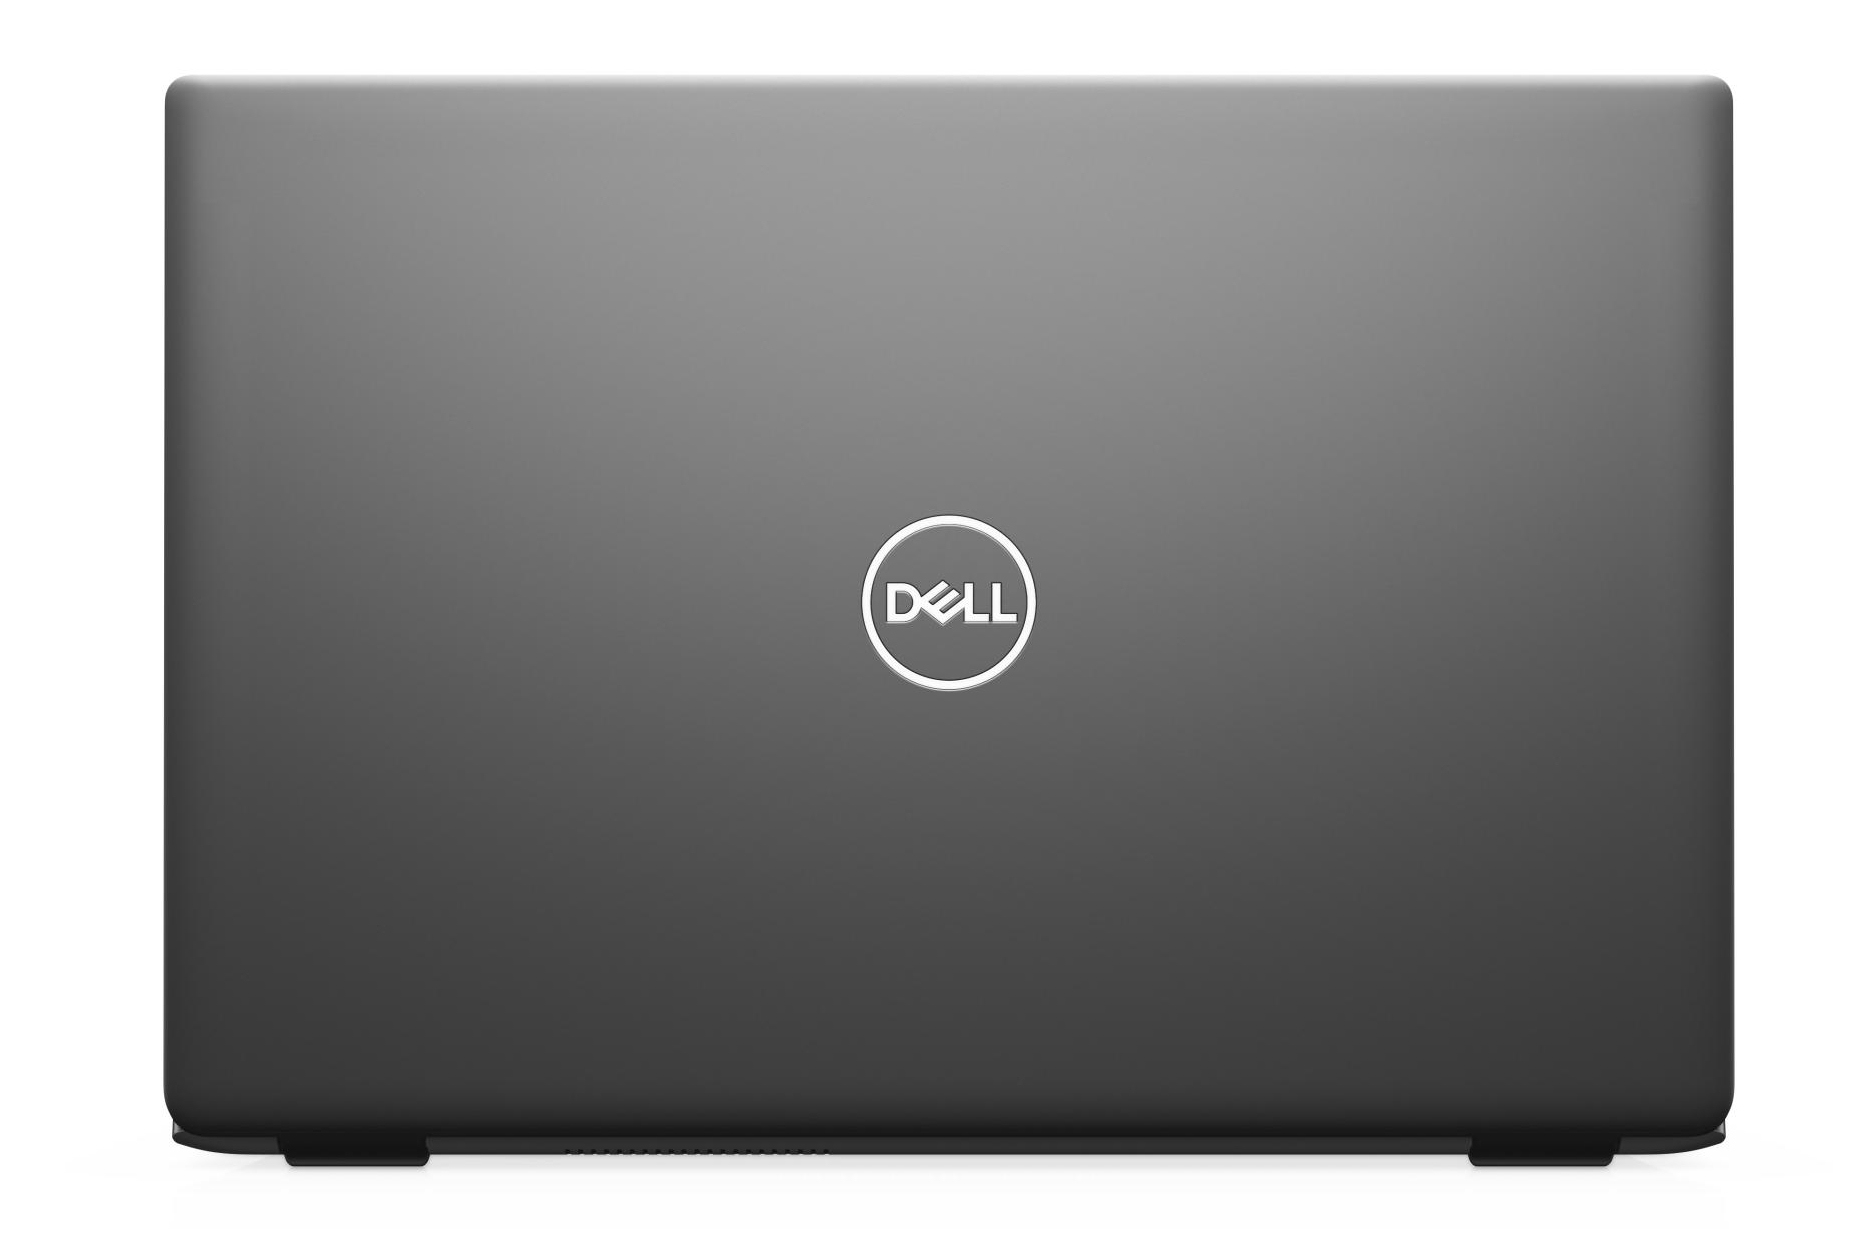  لپ تاپ Dell